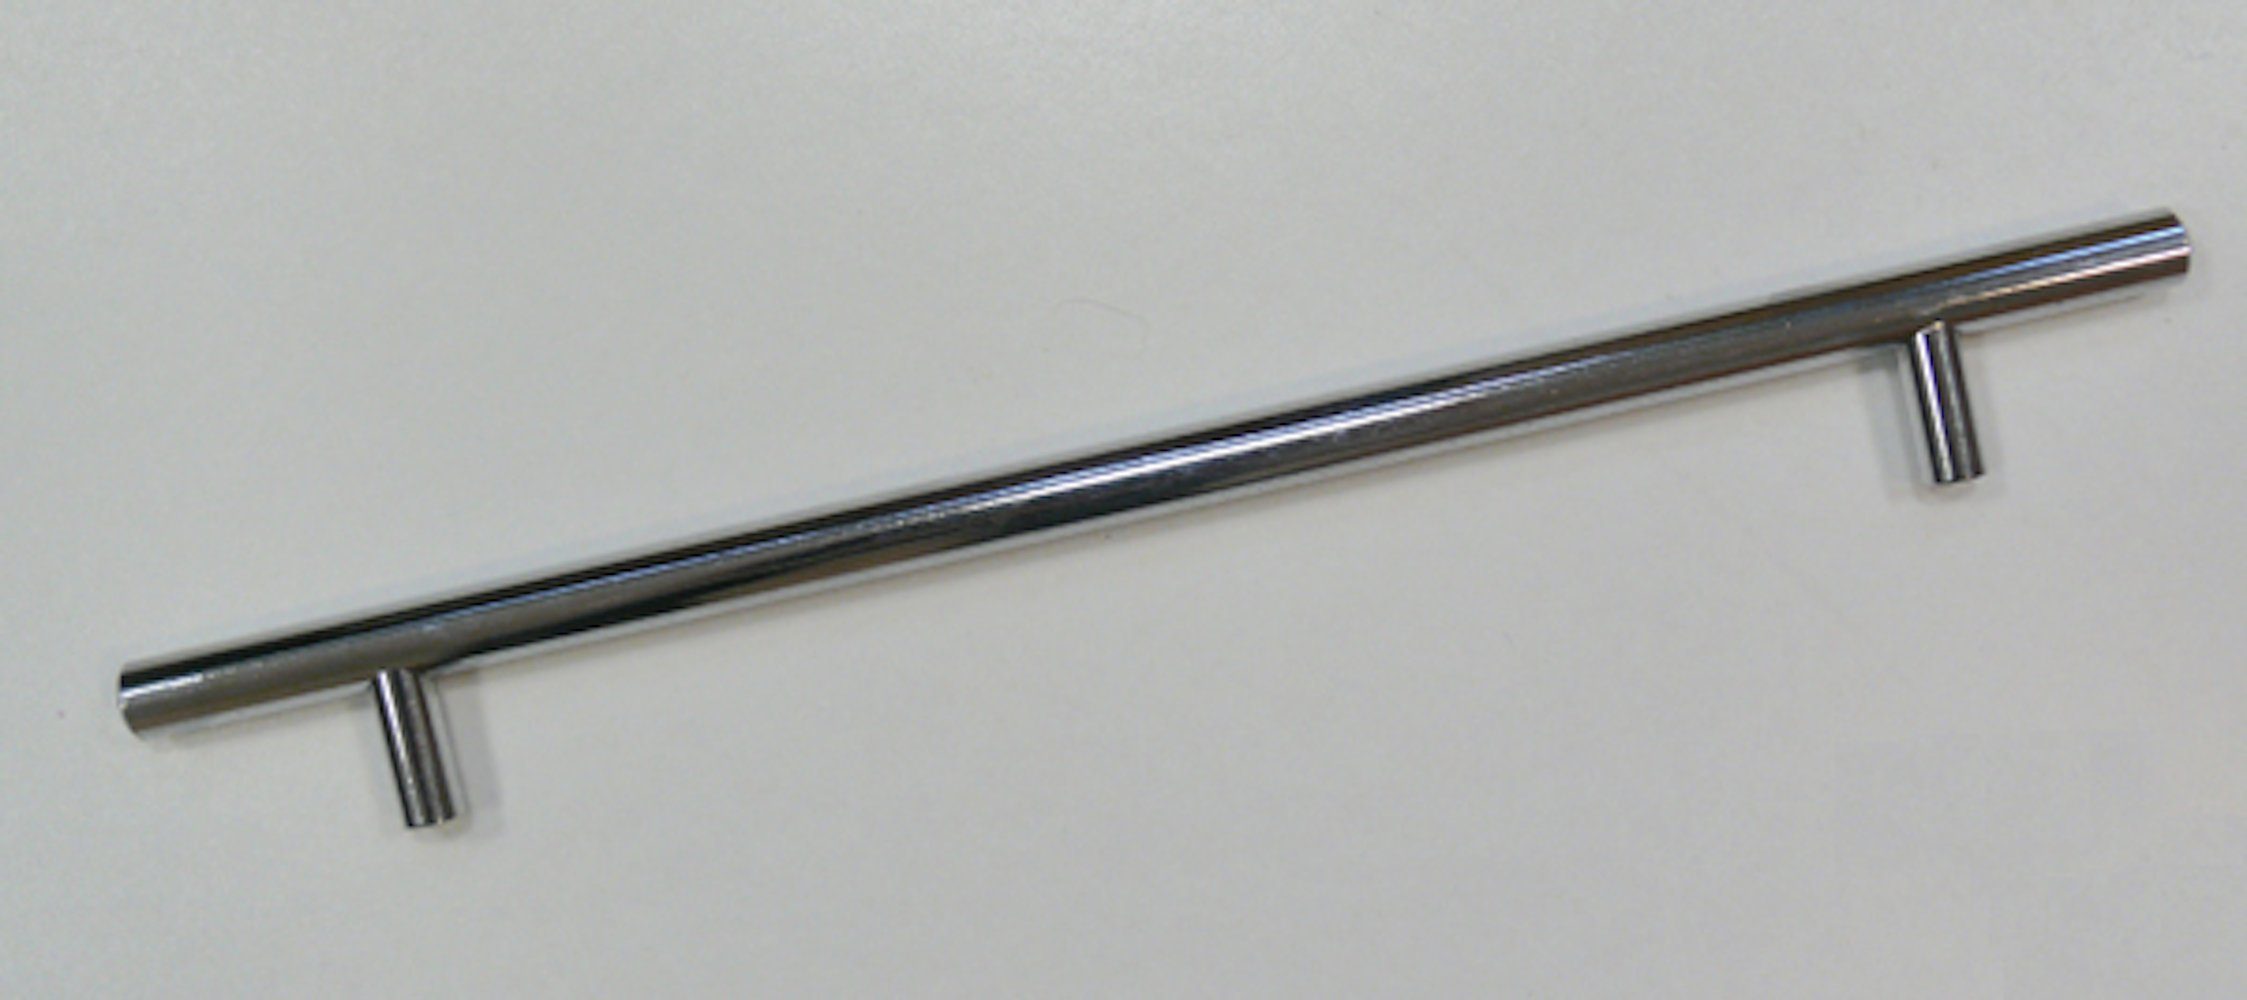 80cm matt Kvantum graphit Front- Feldmann-Wohnen (Kvantum) Korpusfarbe wählbar und 2-türig Klapphängeschrank